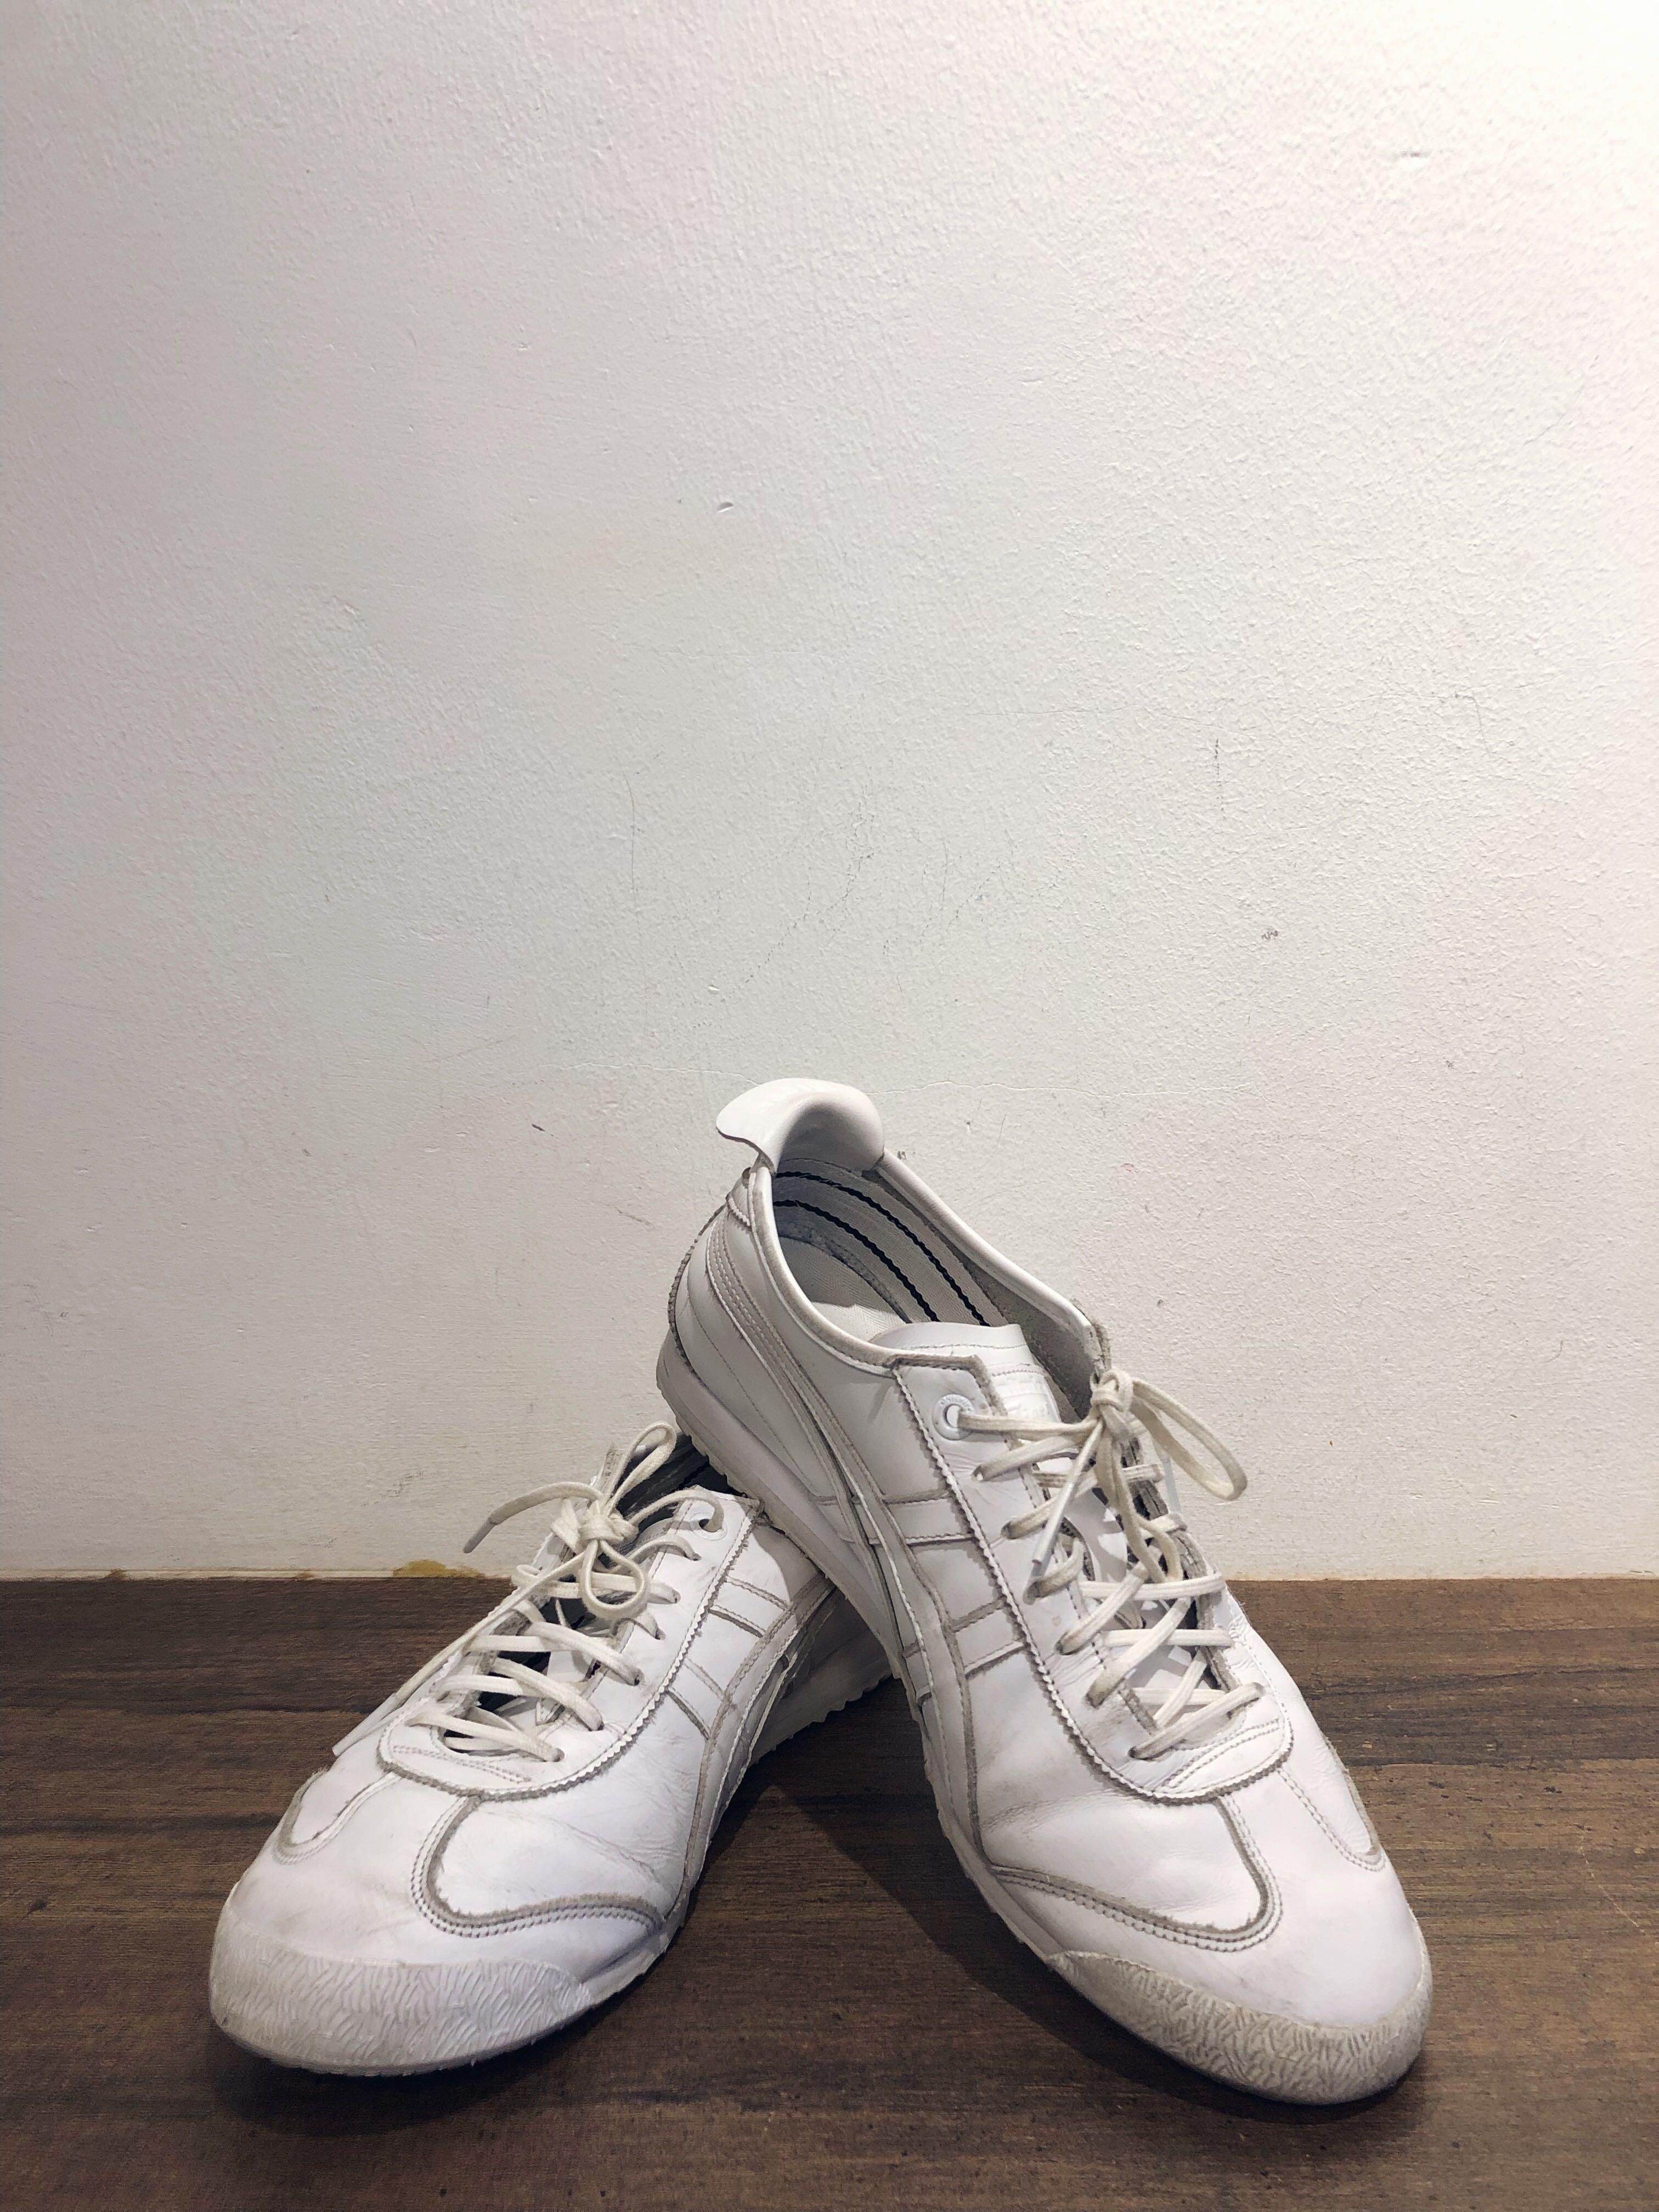 asics tiger white shoes